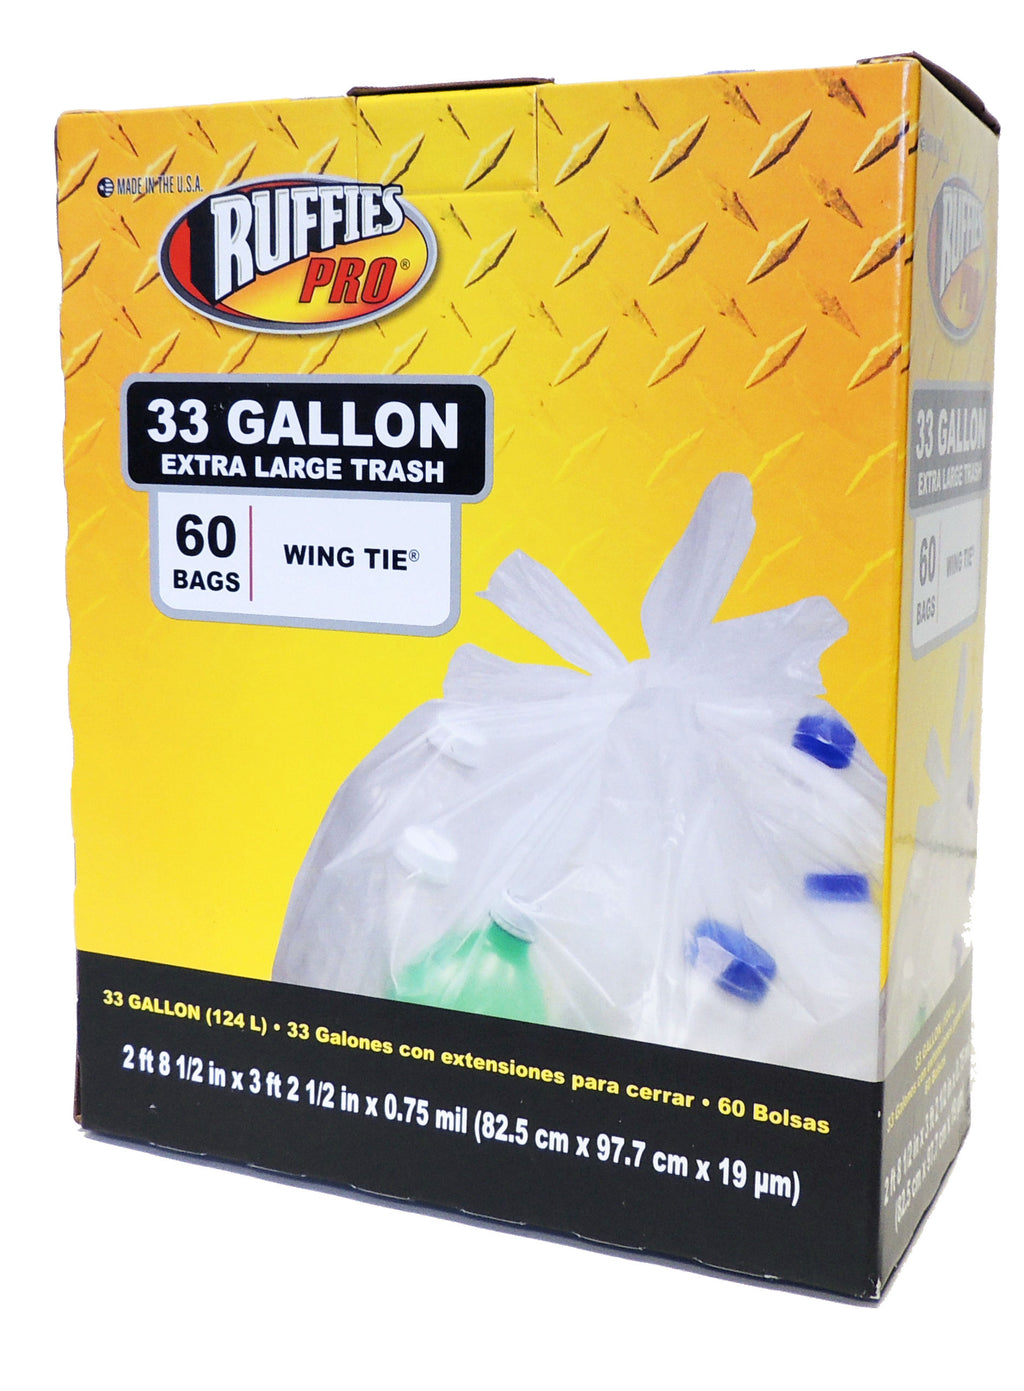 Hefty Flap Tie Medium Trash Bags - 8 Gallon, 24 Count